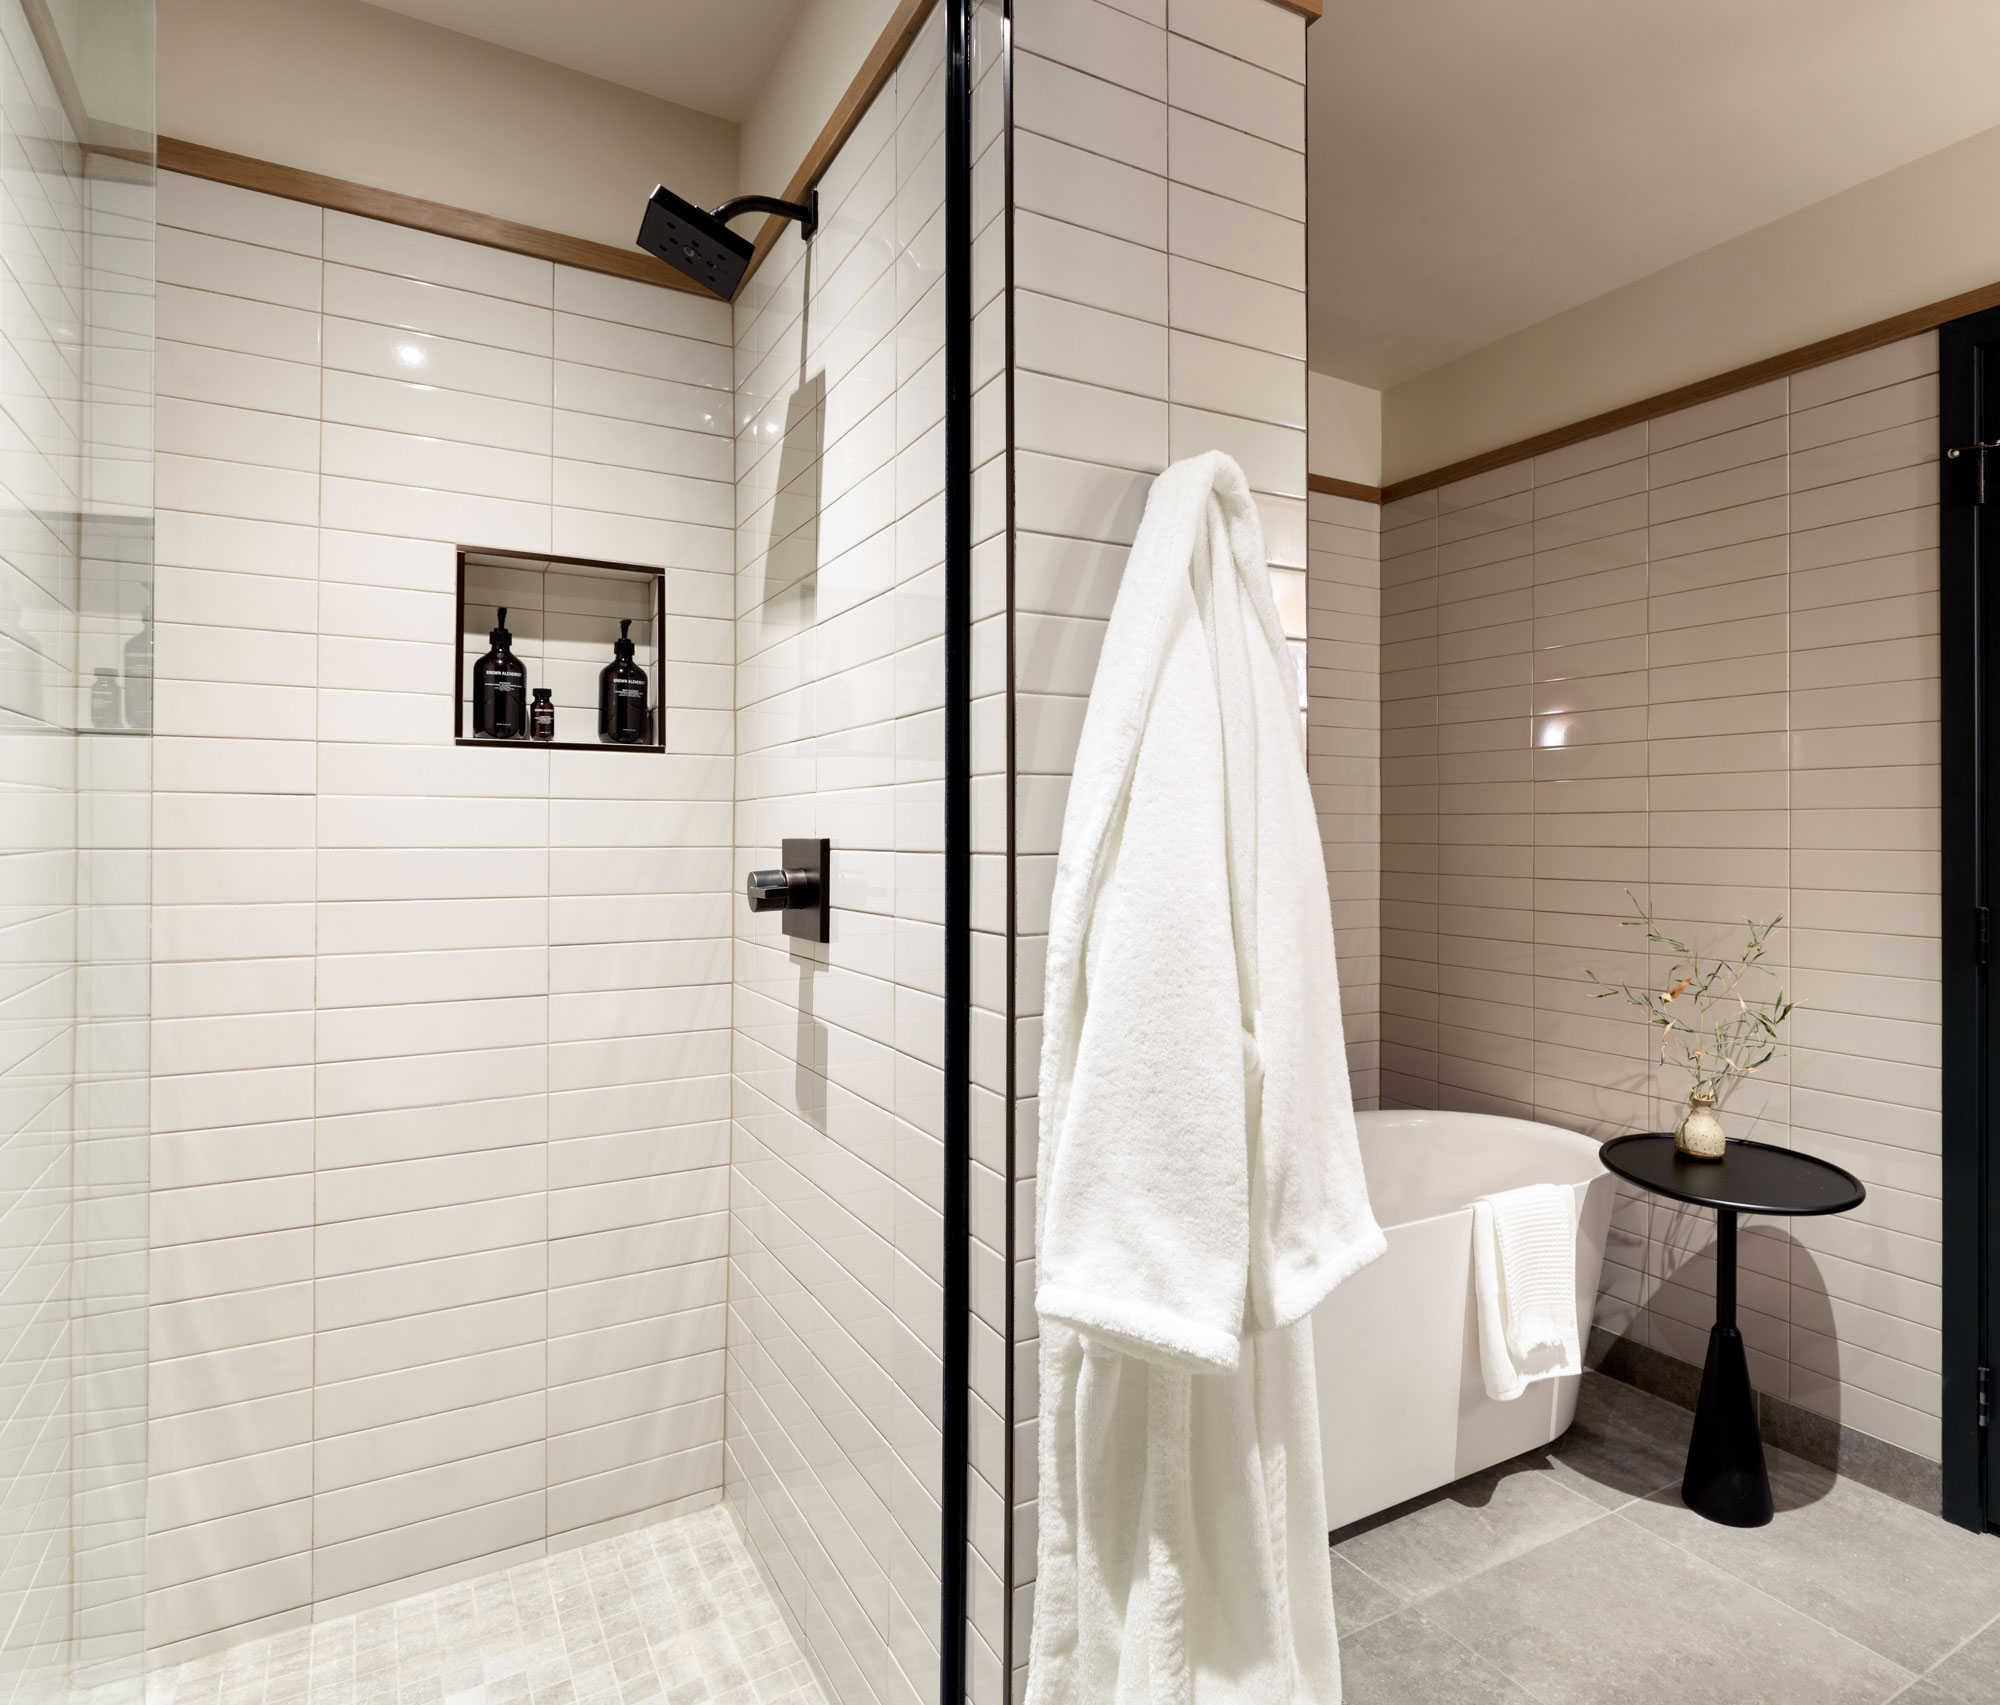 Harbor Grand Hotel Bathroom Walk-In Shower and Tub